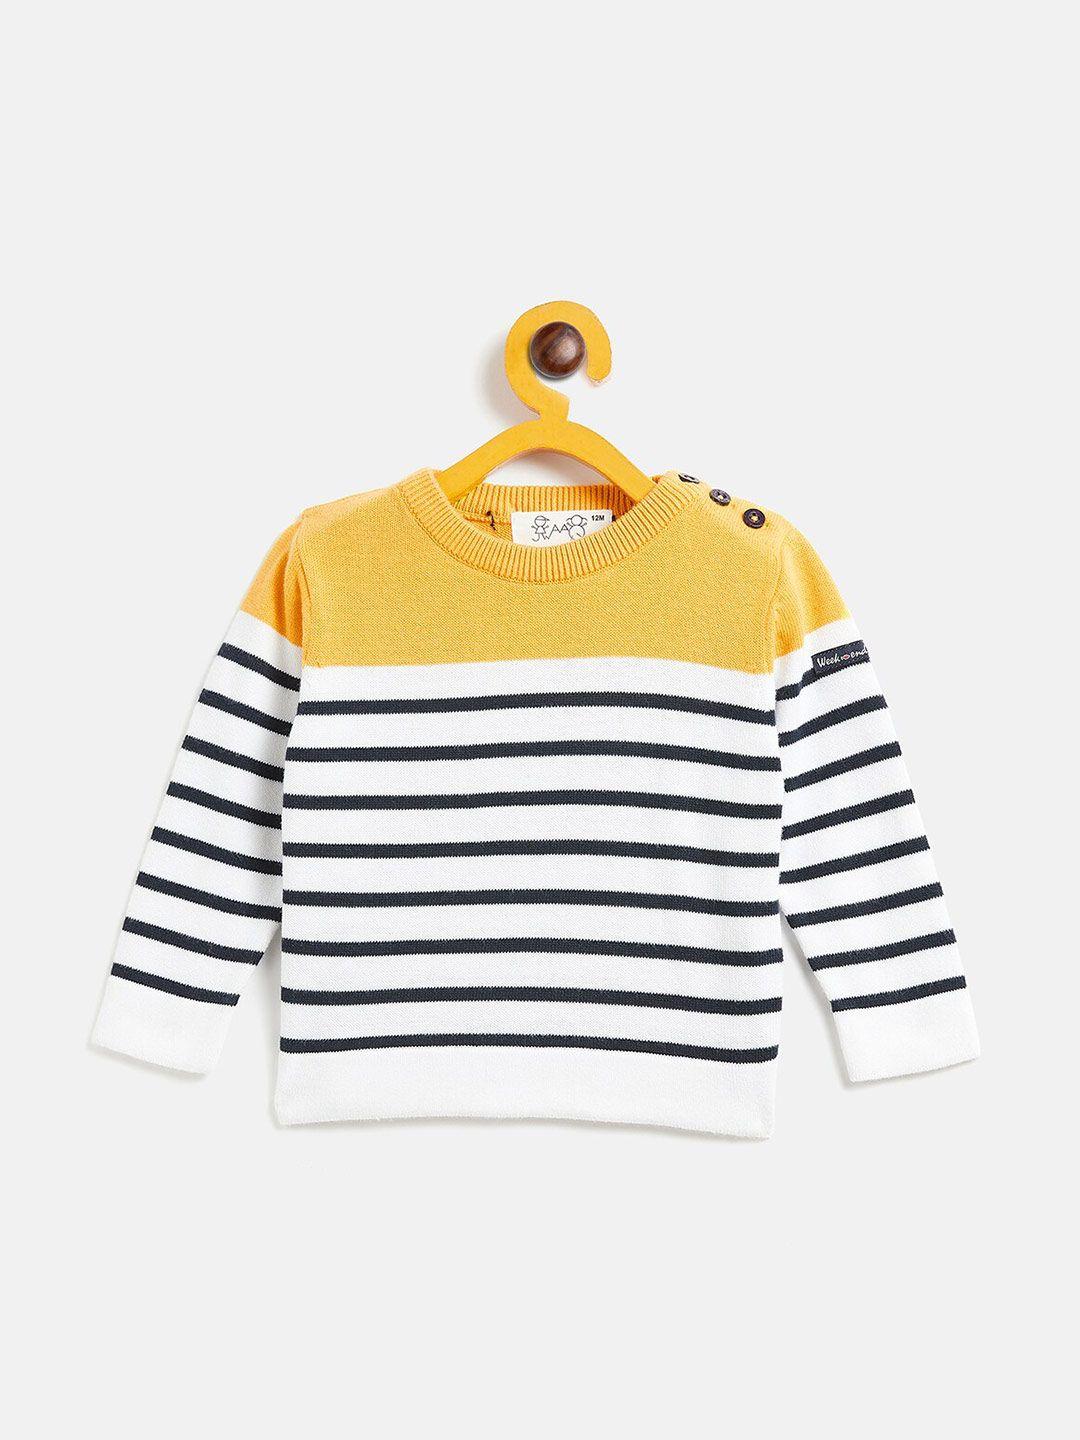 jwaaq unisex kids yellow & white striped pullover